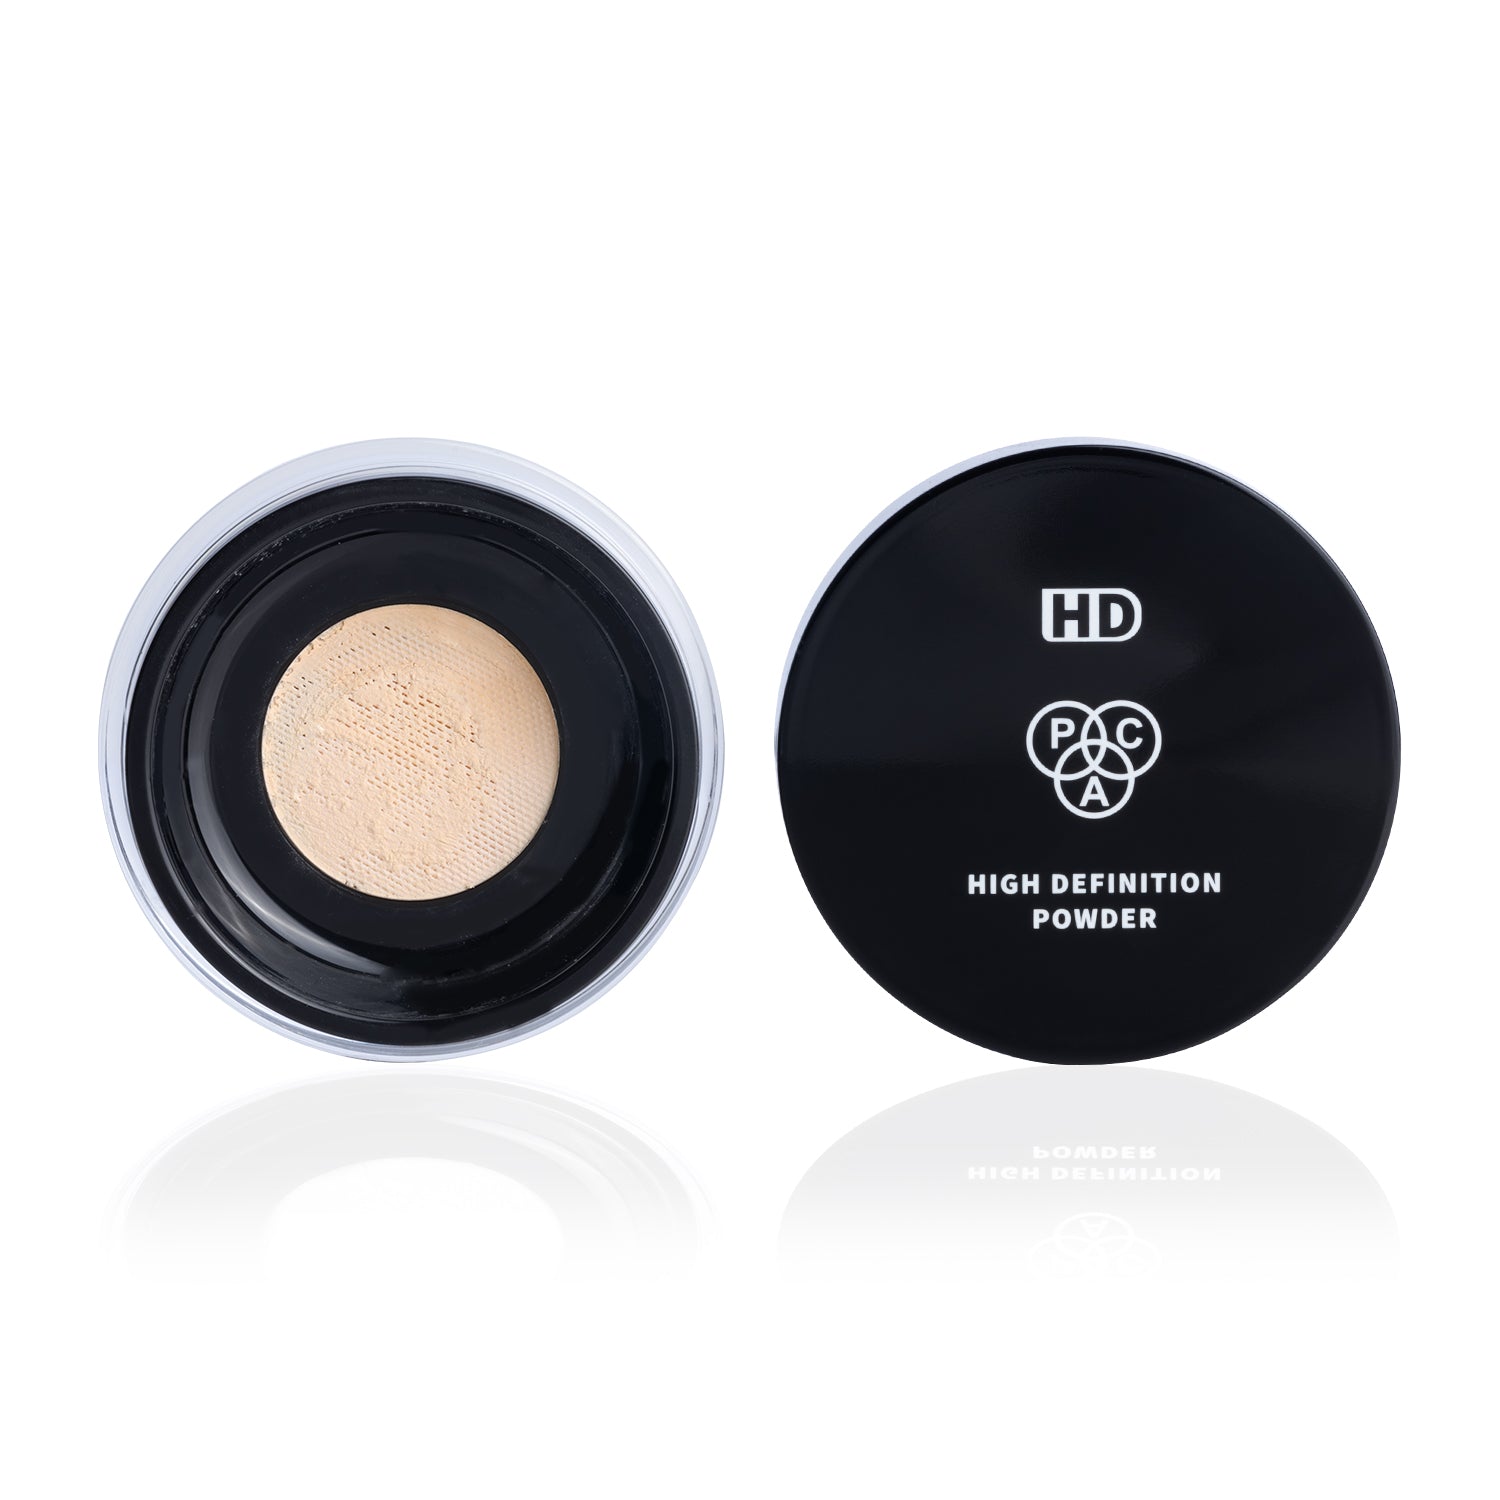 PAC Cosmetics HD Powder #Size_ 8gm+#Color_Banana